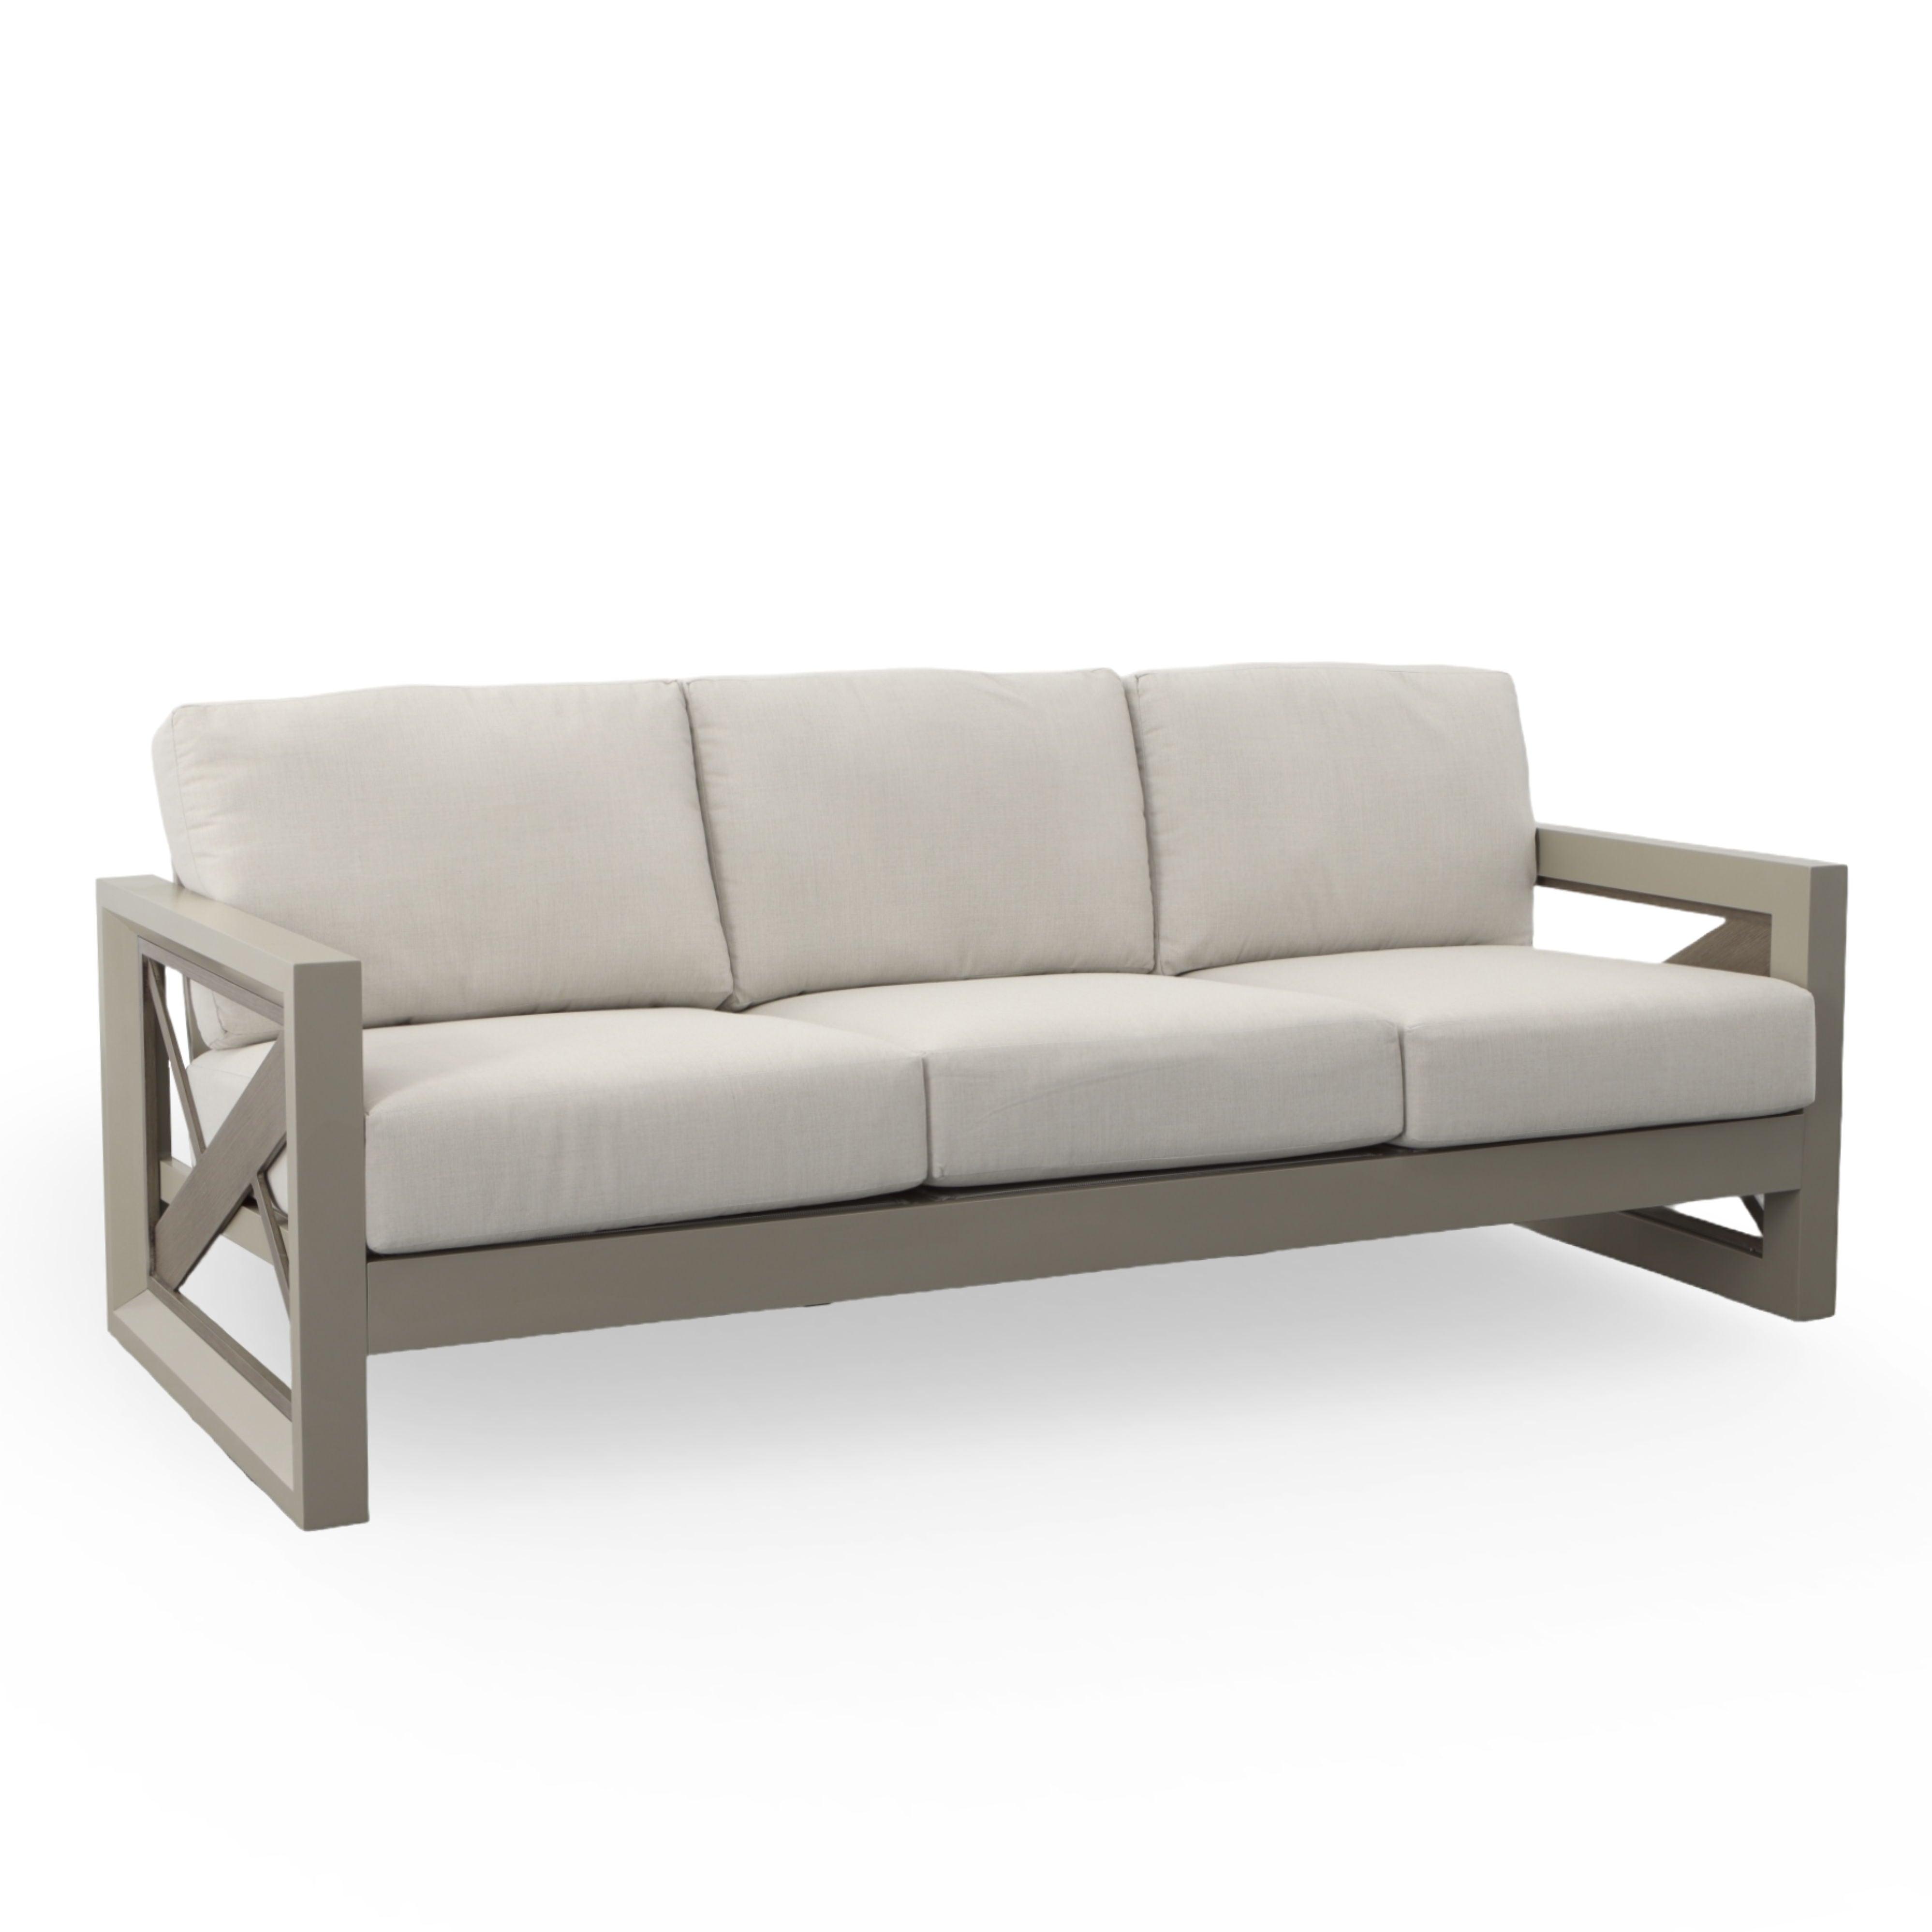 Steve Silver Furniture - Dalilah - Patio Sofa - Gray - 5th Avenue Furniture